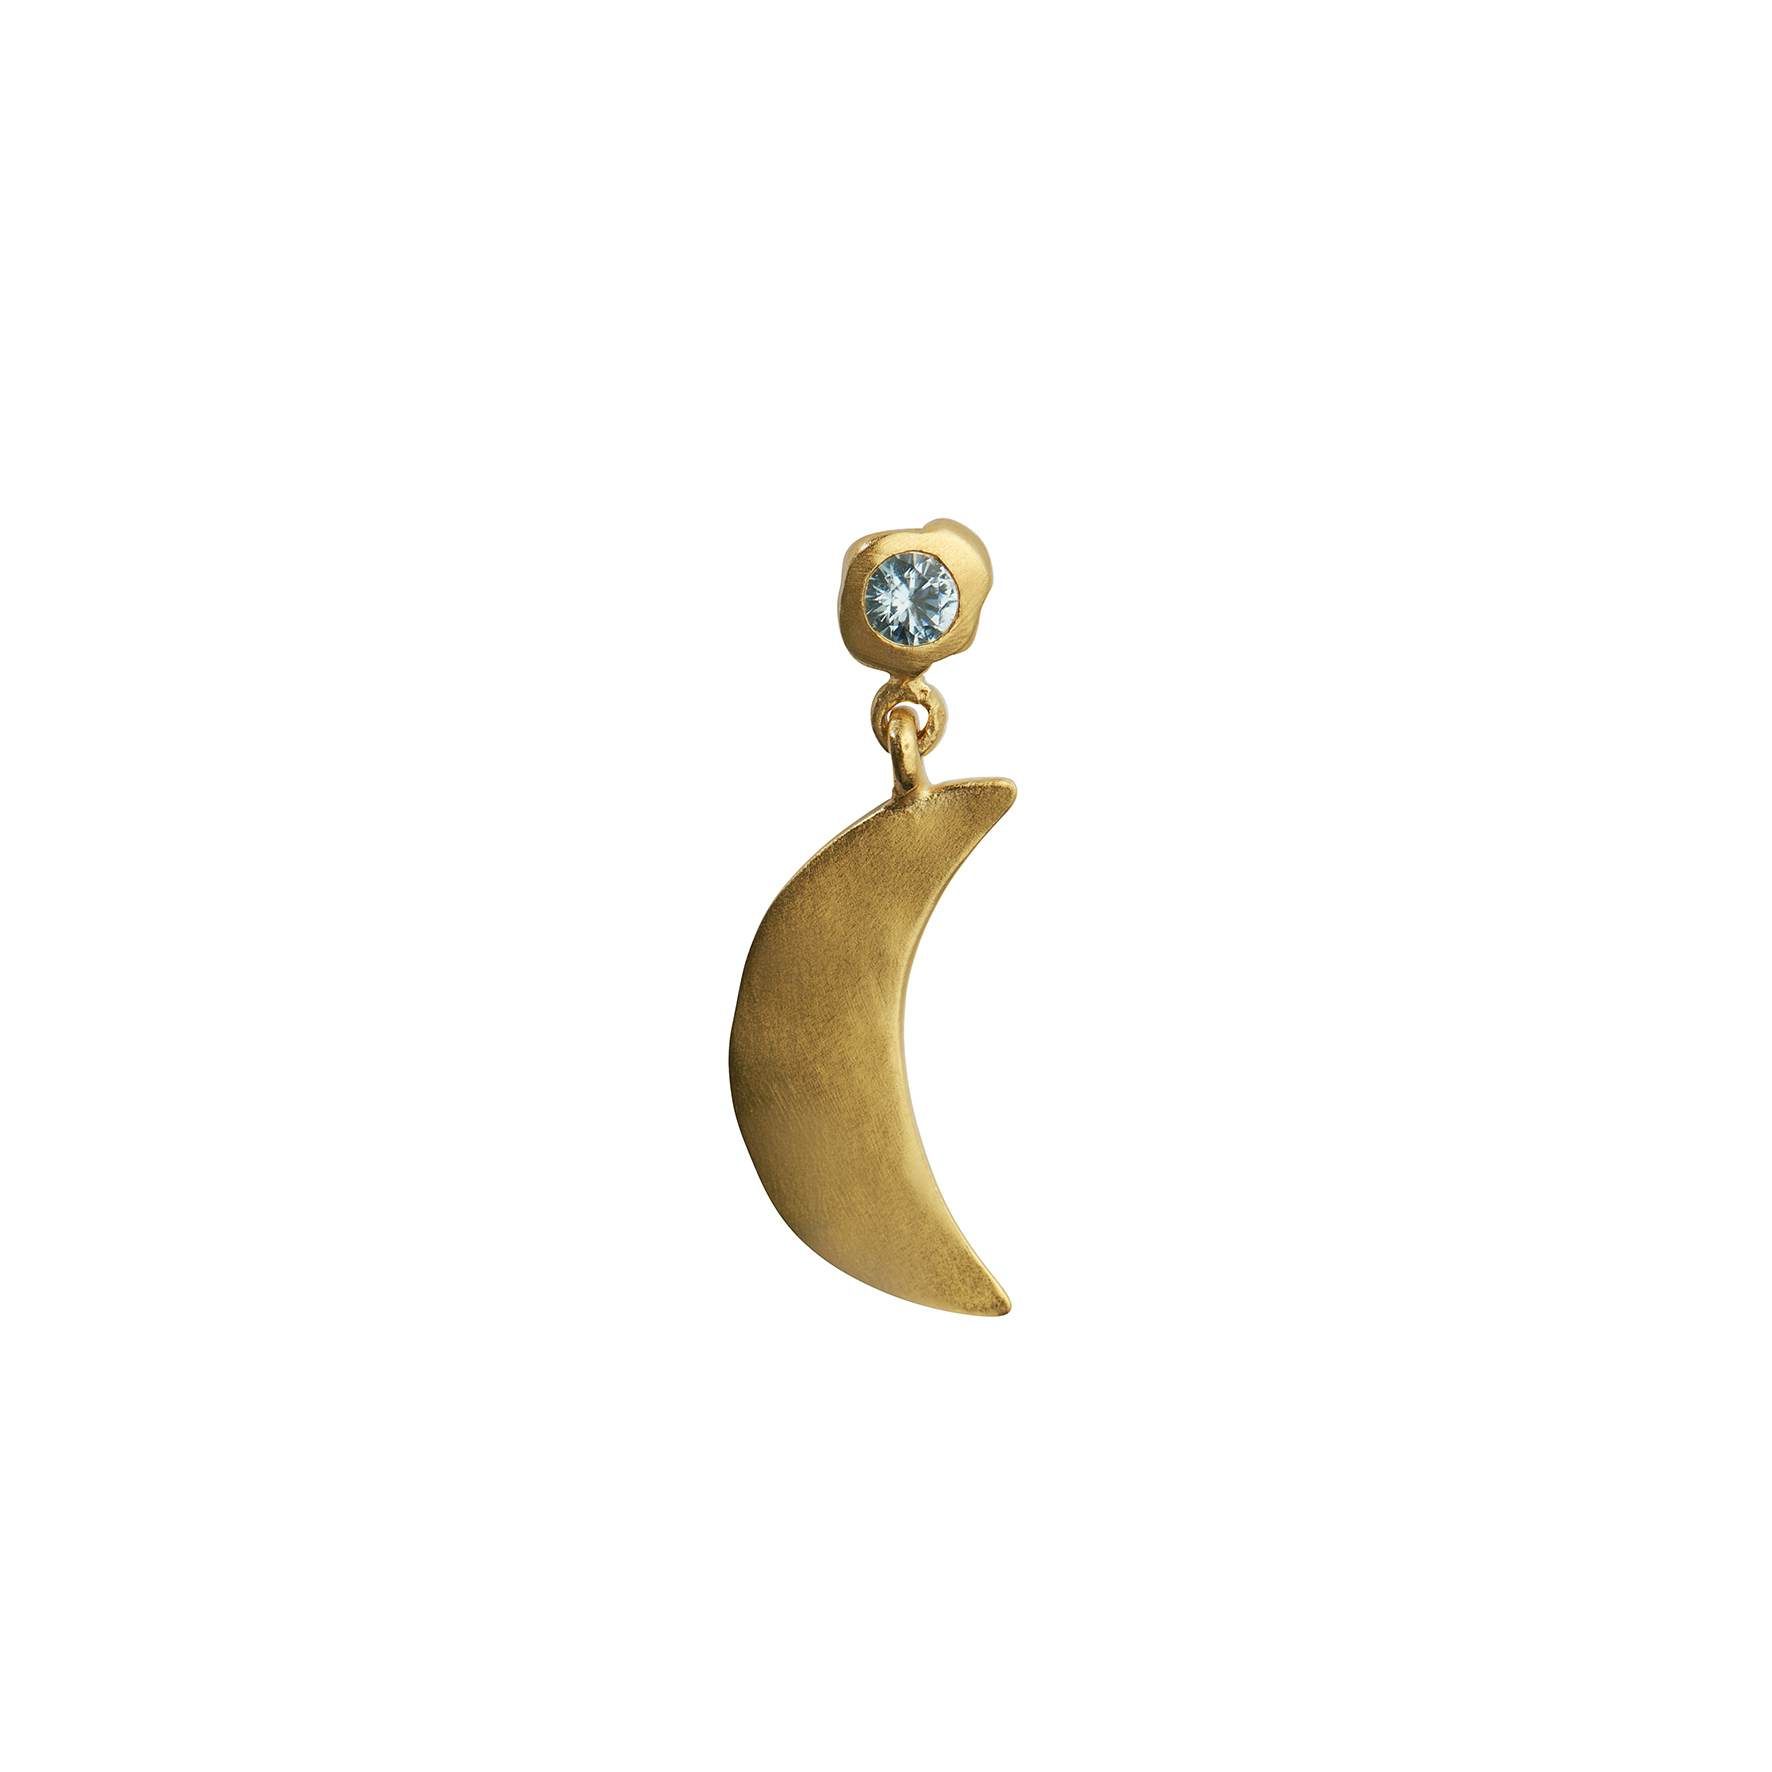 Big Dot Bella Moon with Blue Lagune Stone fra STINE A Jewelry i Forgylt-Sølv Sterling 925